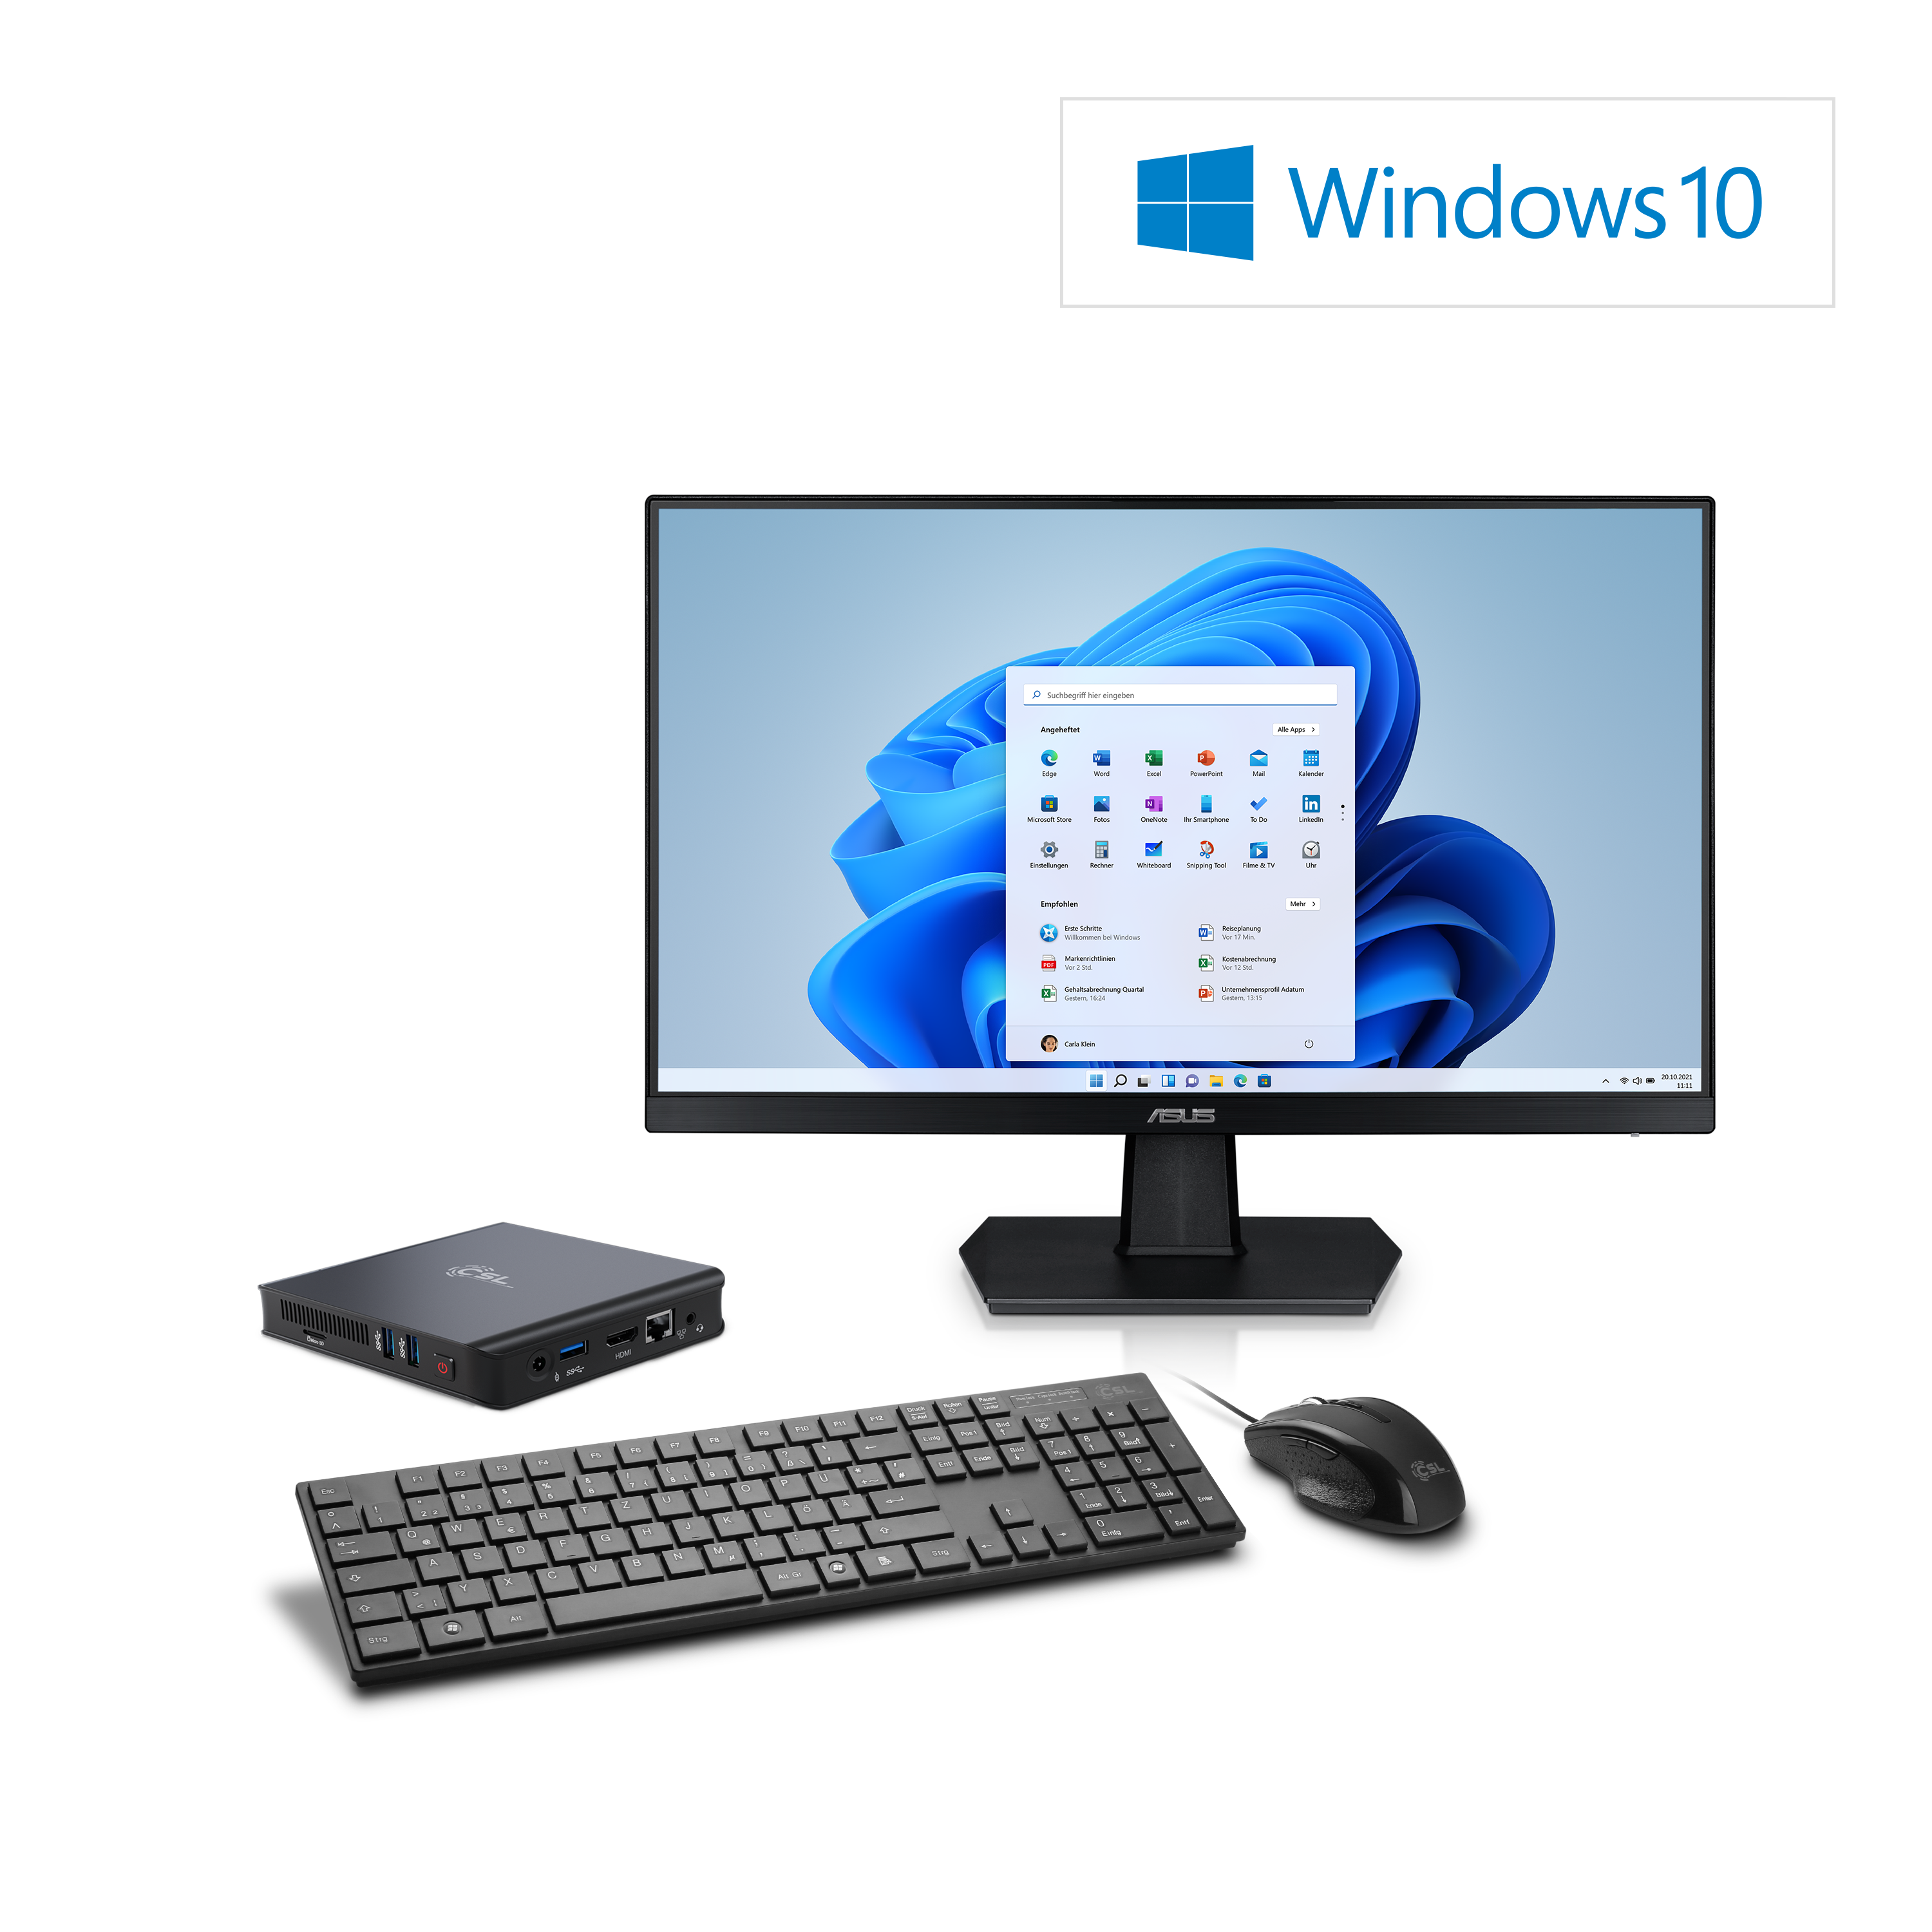 CSL Computer | Mini PC - CSL Narrow Box Ultra HD Compact v4 / Windows 10  Home inkl. 24